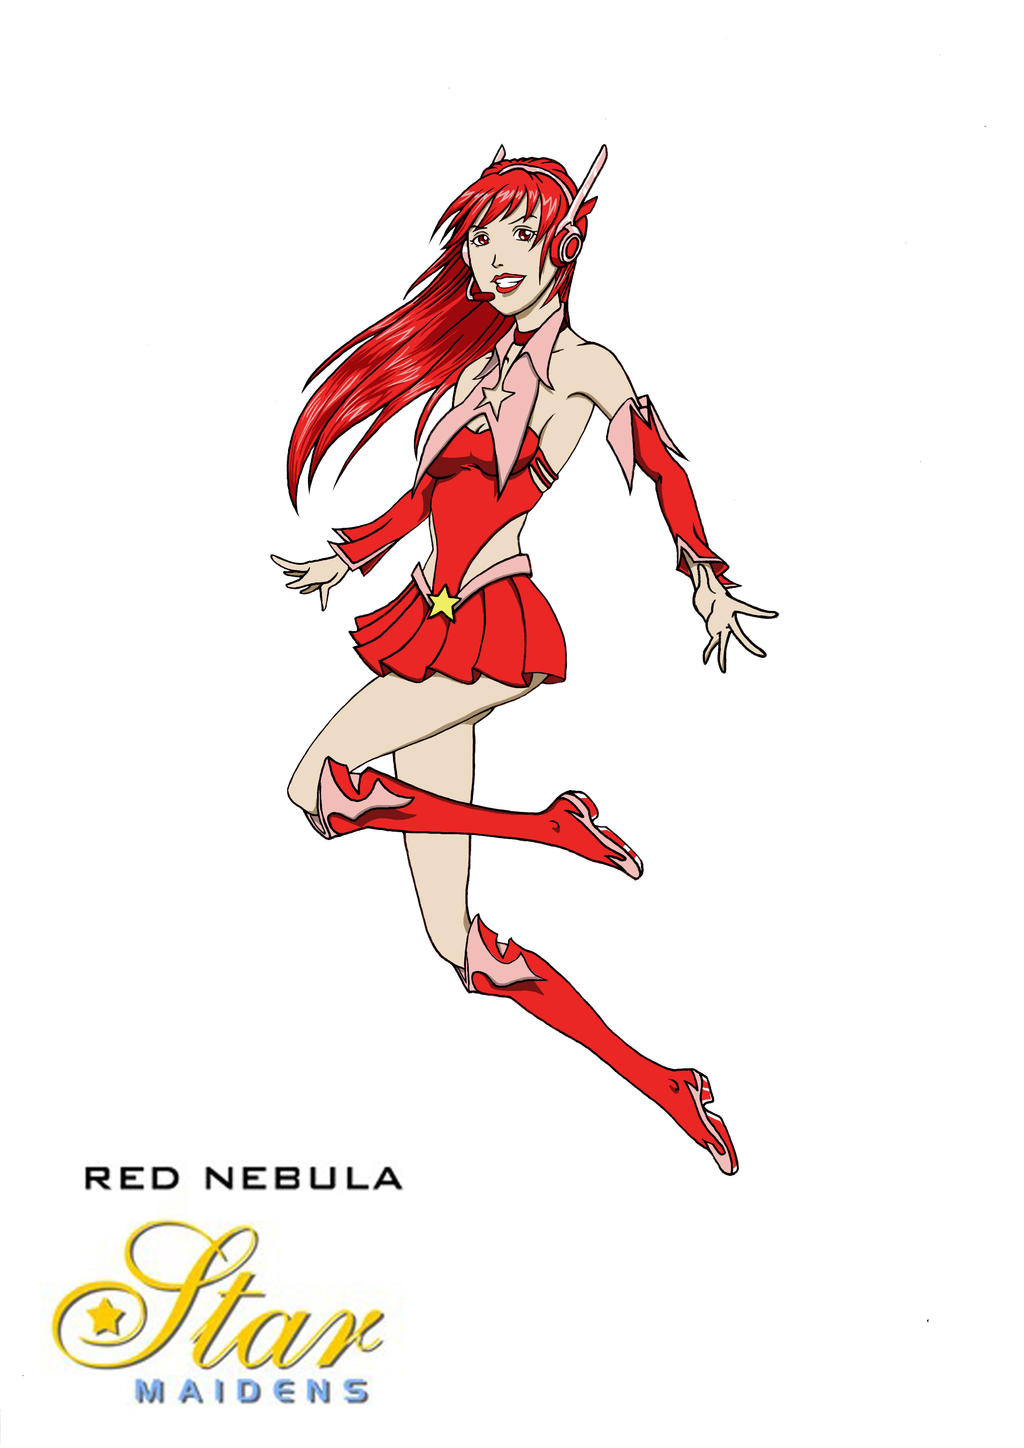 Star Maiden: Red Nebula